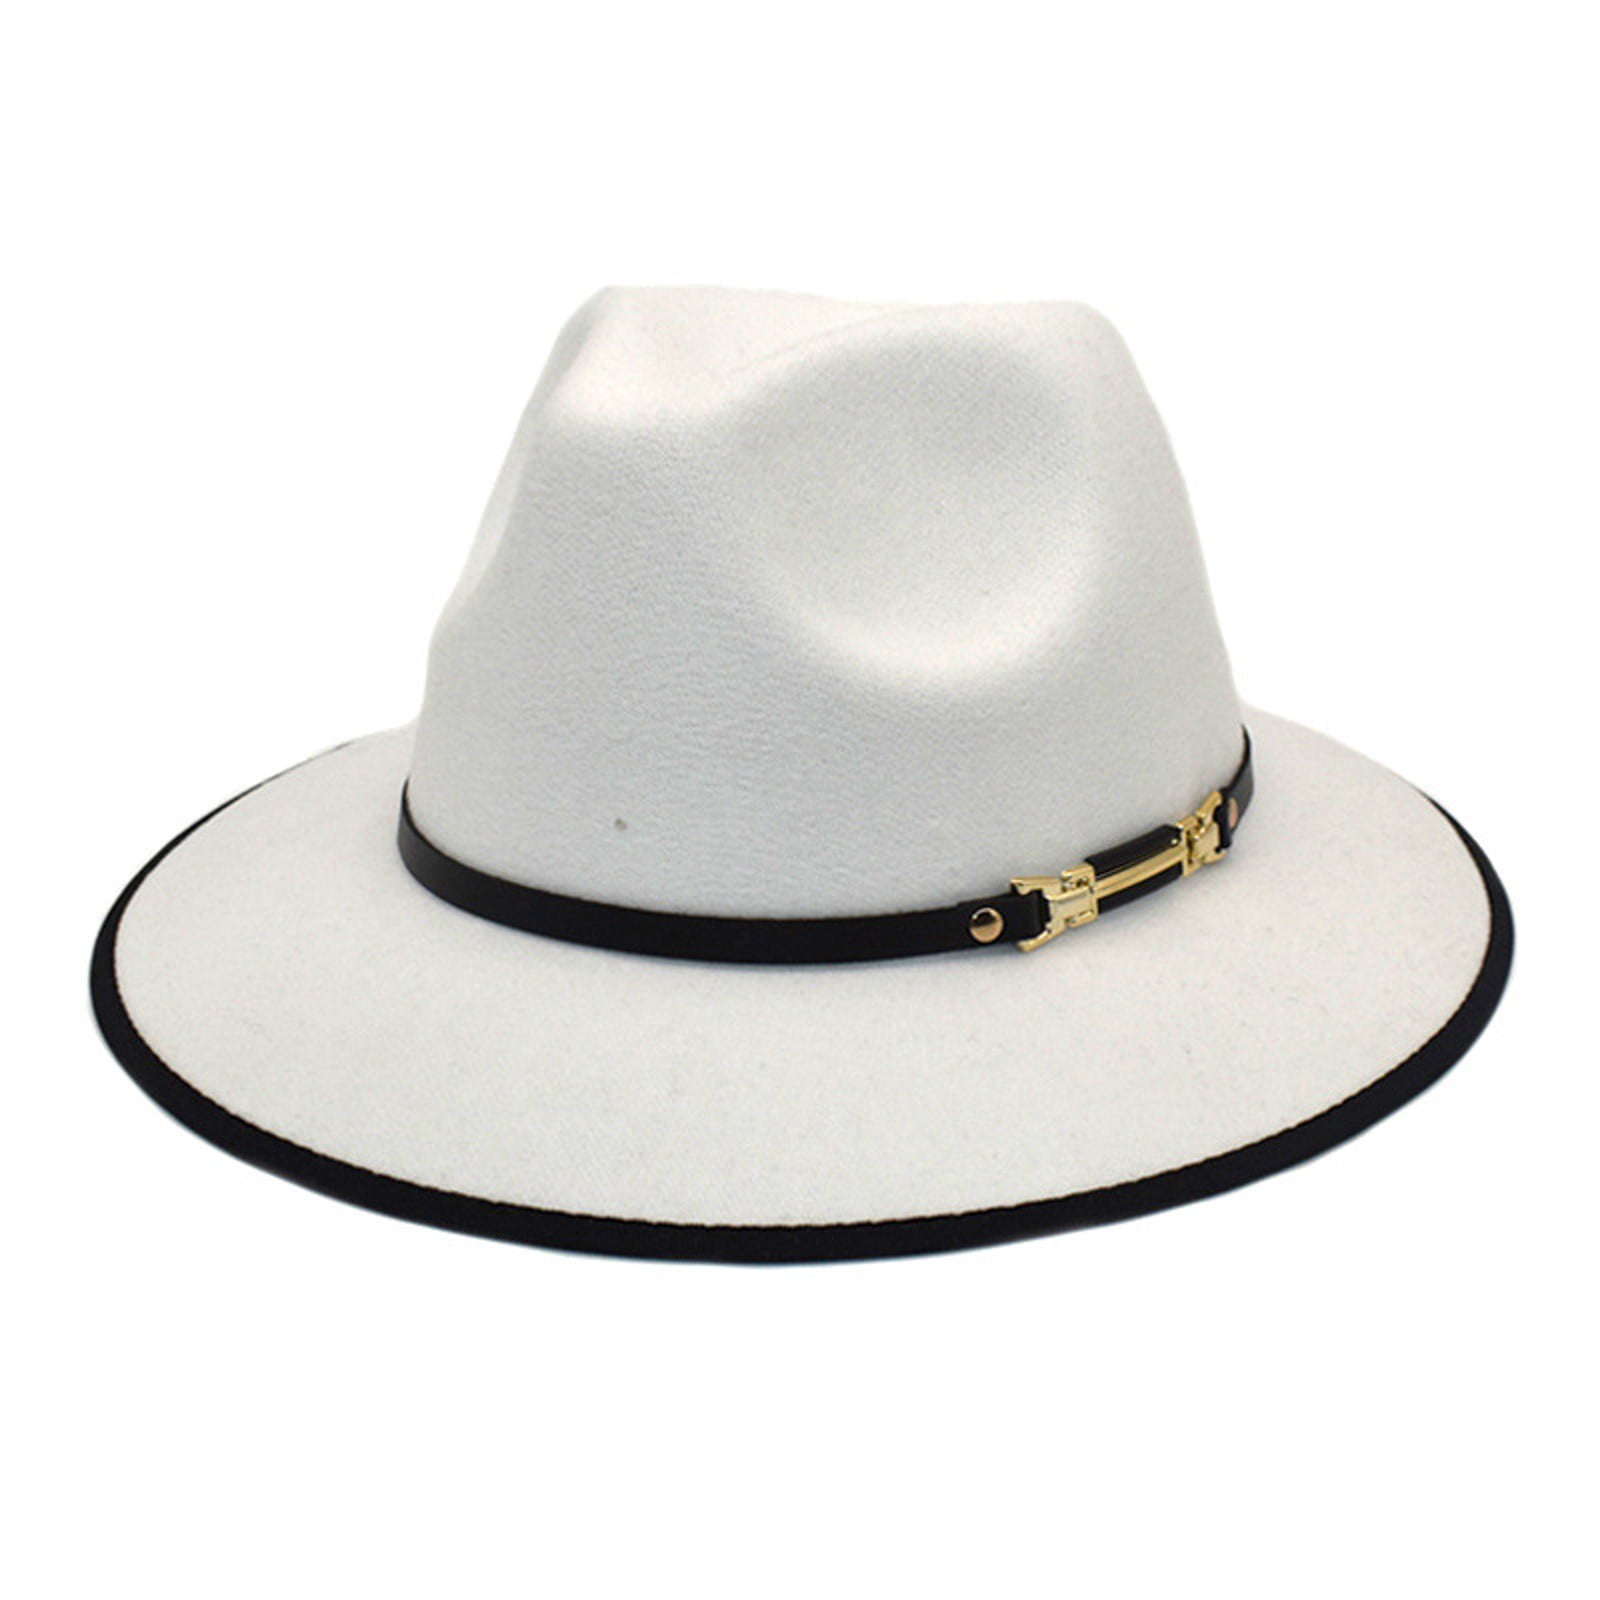 2DXuixsh Cowboy Western Hats for Men Adult Casual Solid Summer